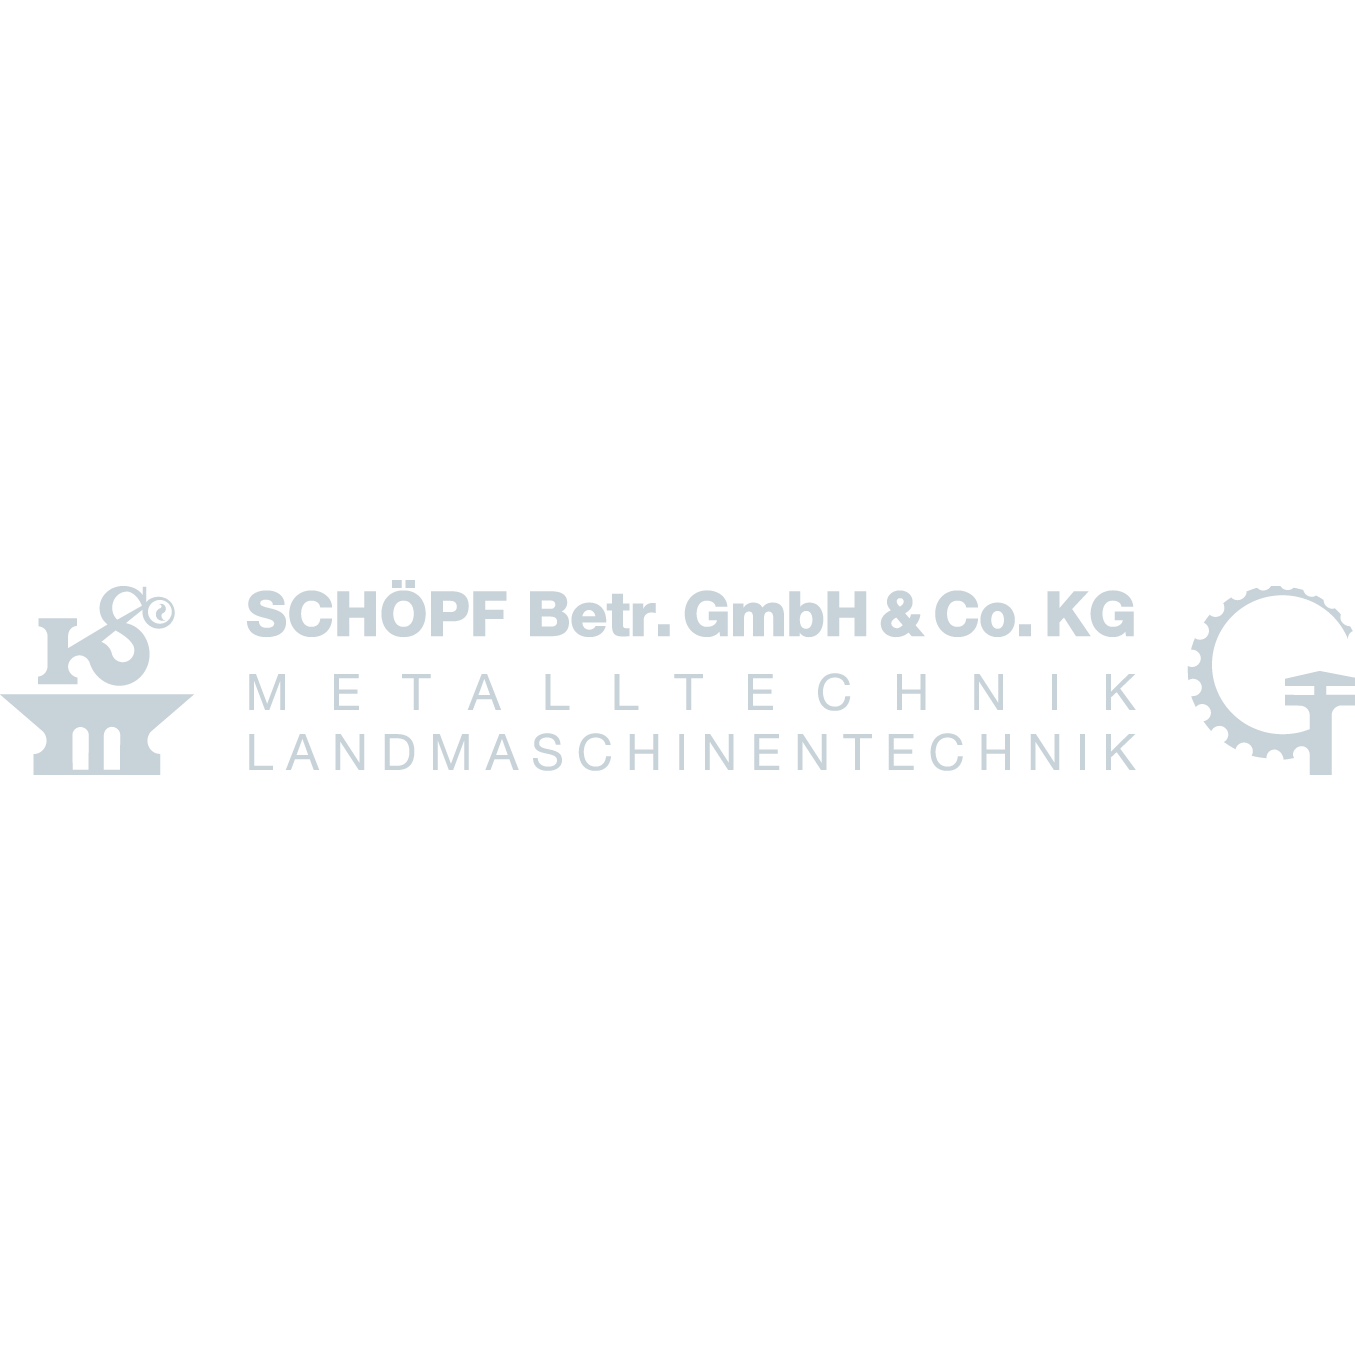 Schöpf Betr. GmbH & Co KG Logo